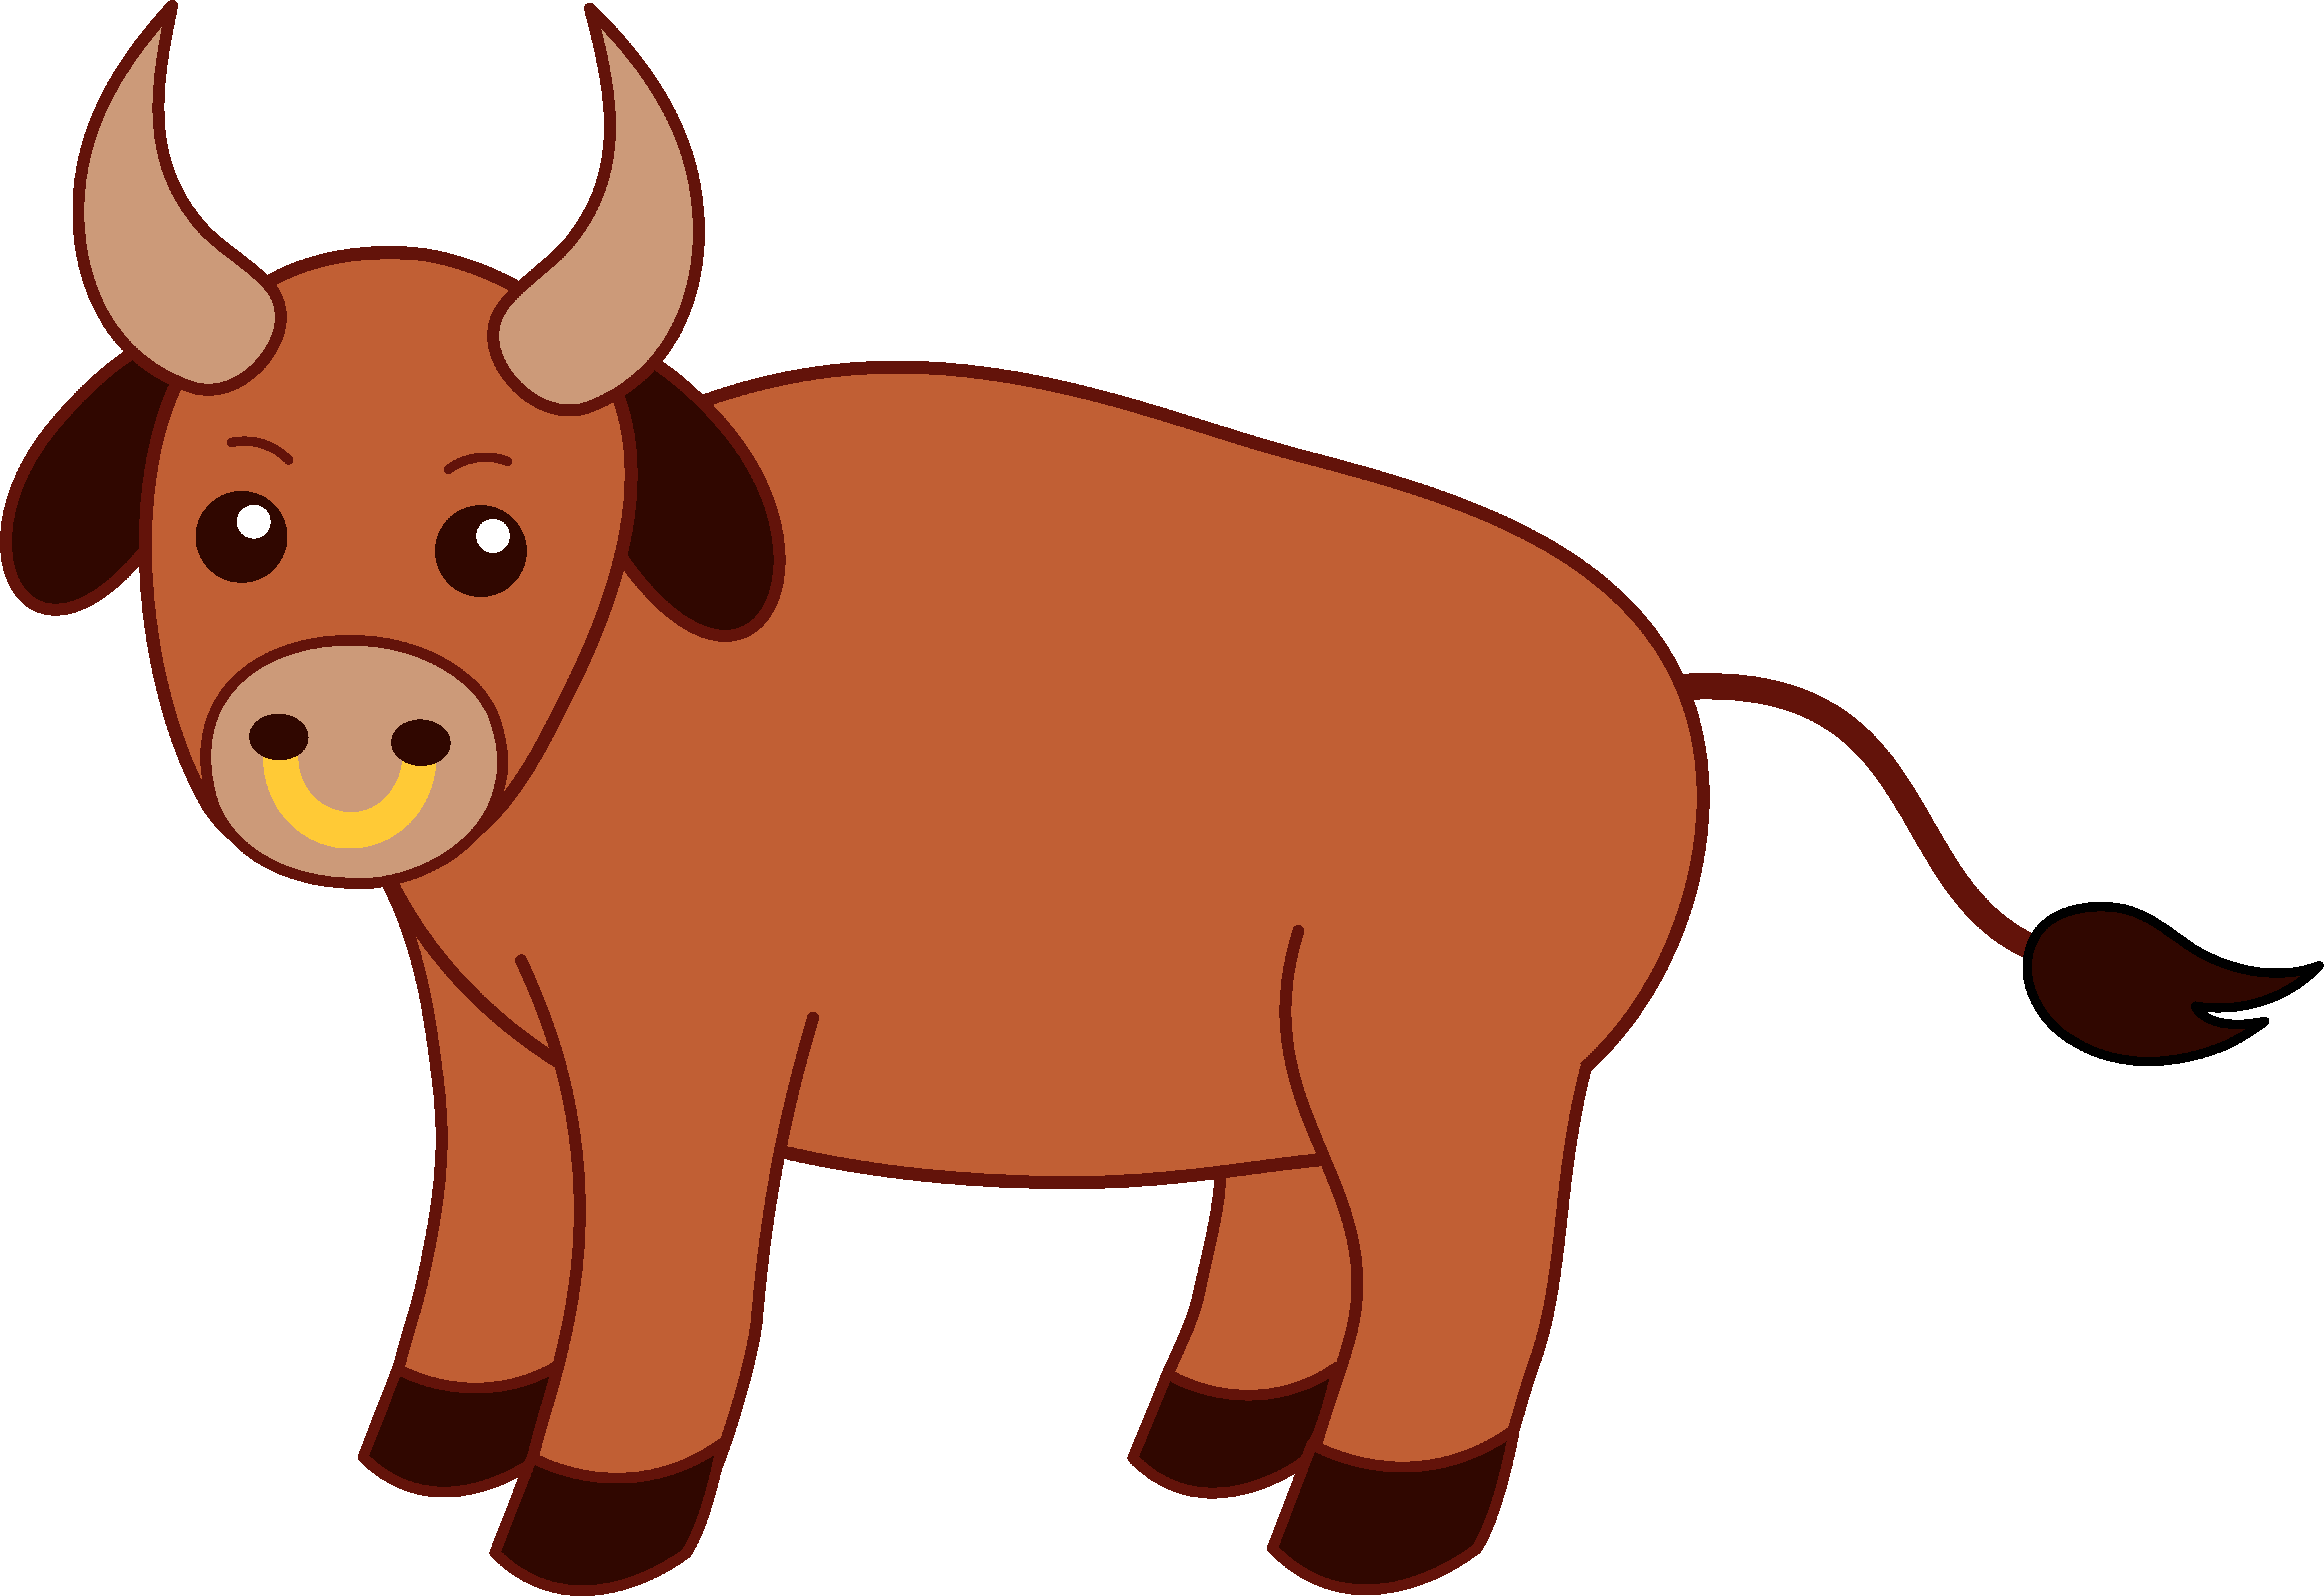 Free Cartoon Bulls, Download Free Cartoon Bulls png images, Free